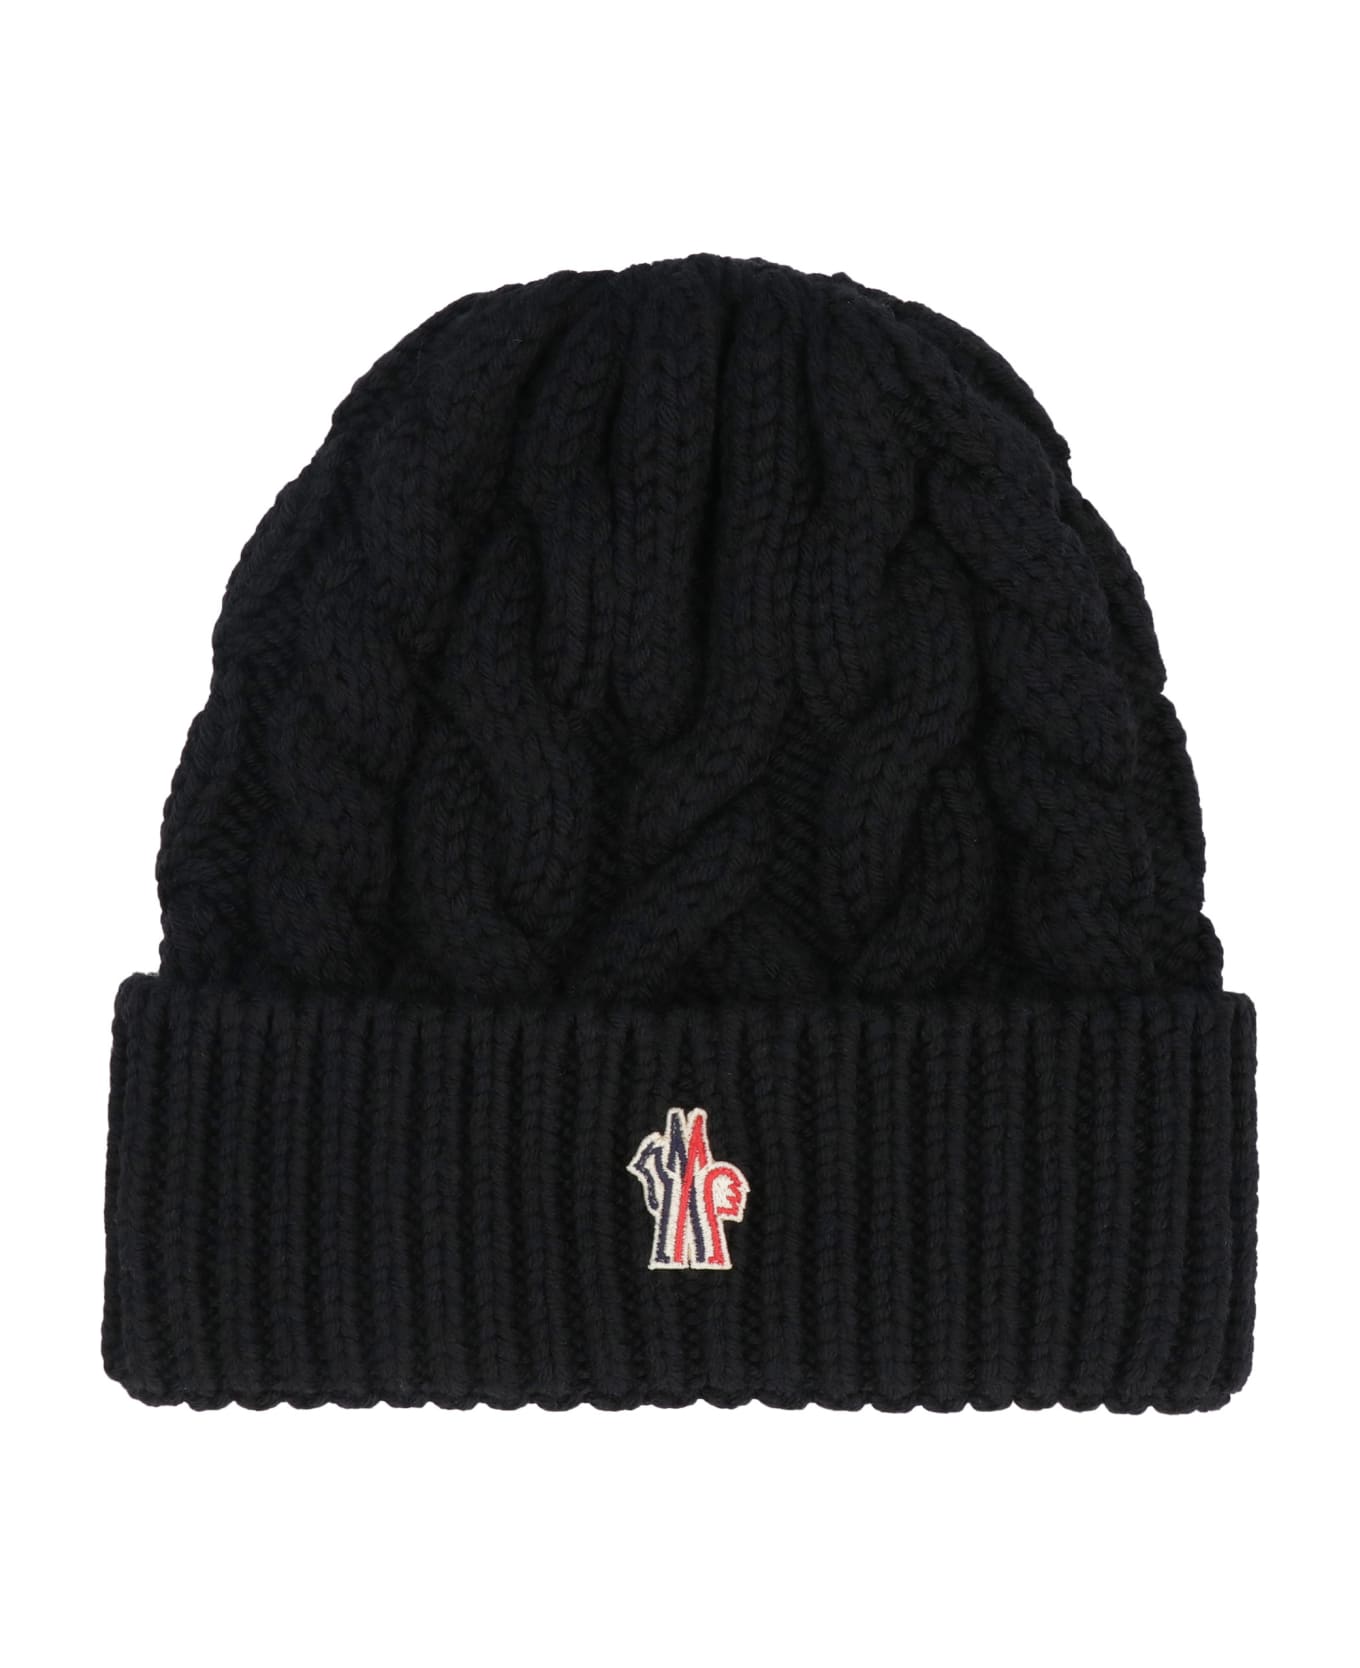 Moncler Grenoble Wool Hat - Black